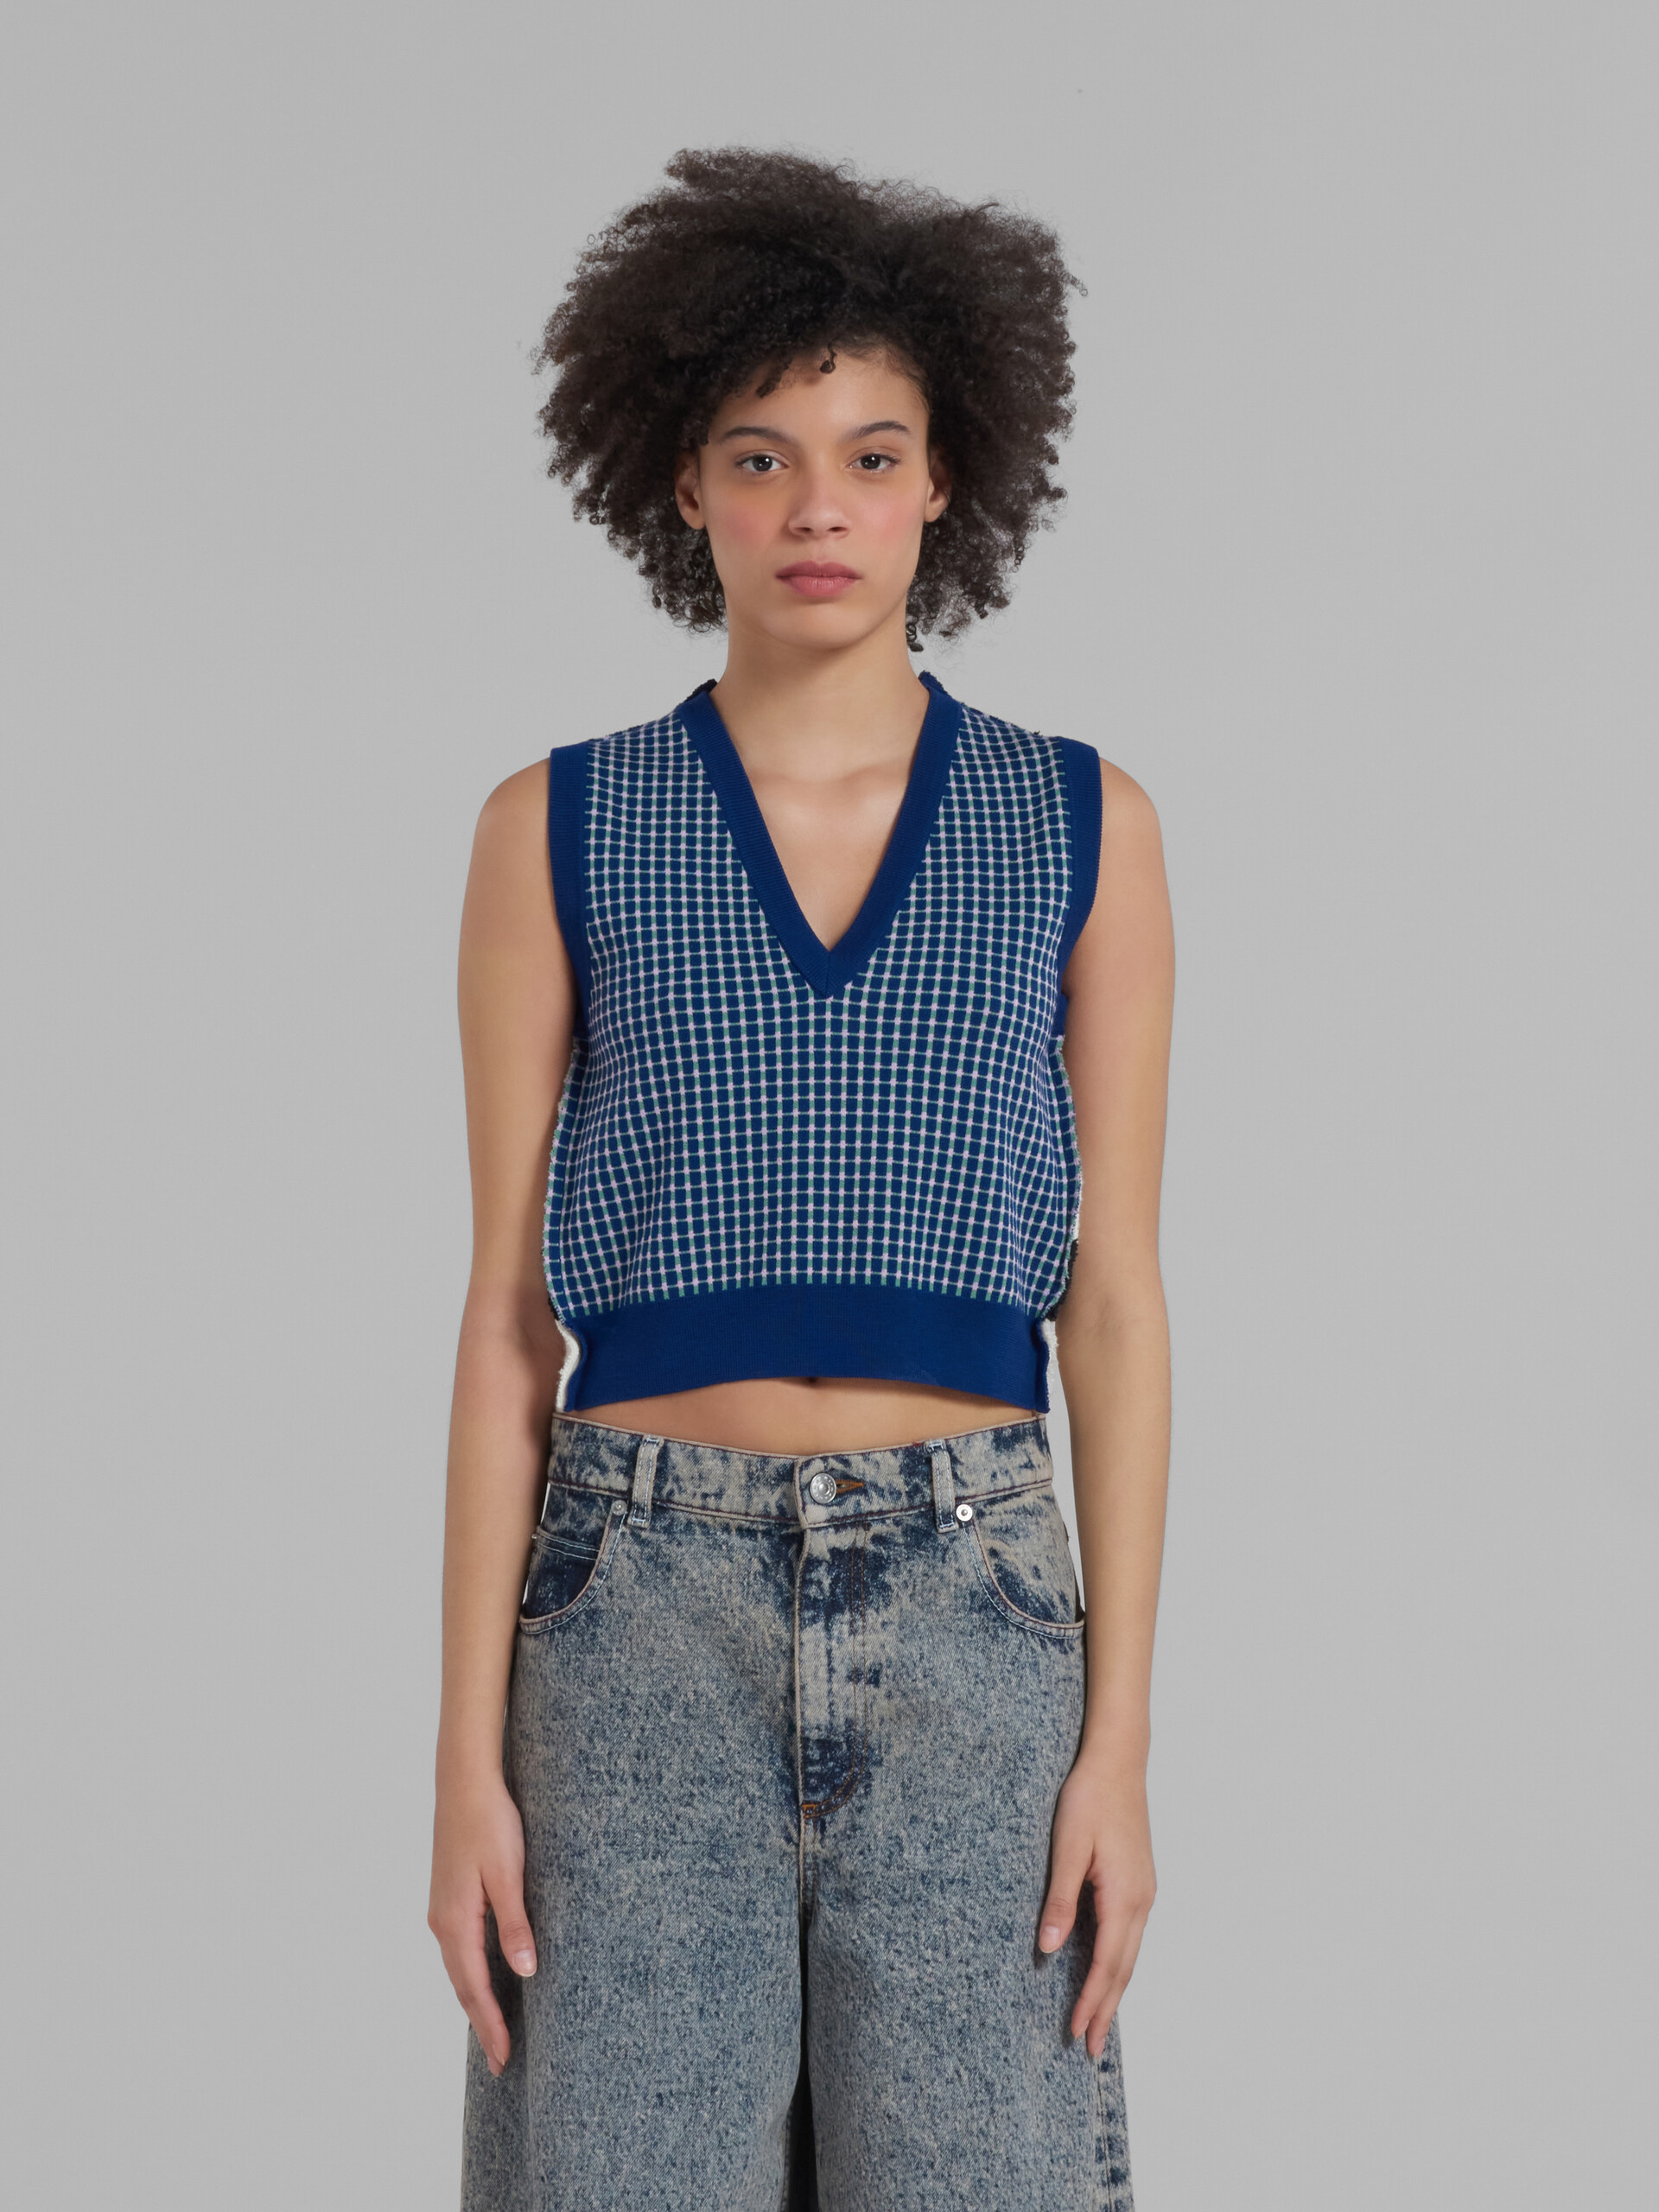 Blue half-and-half sleeveless jumper - Pullovers - Image 2